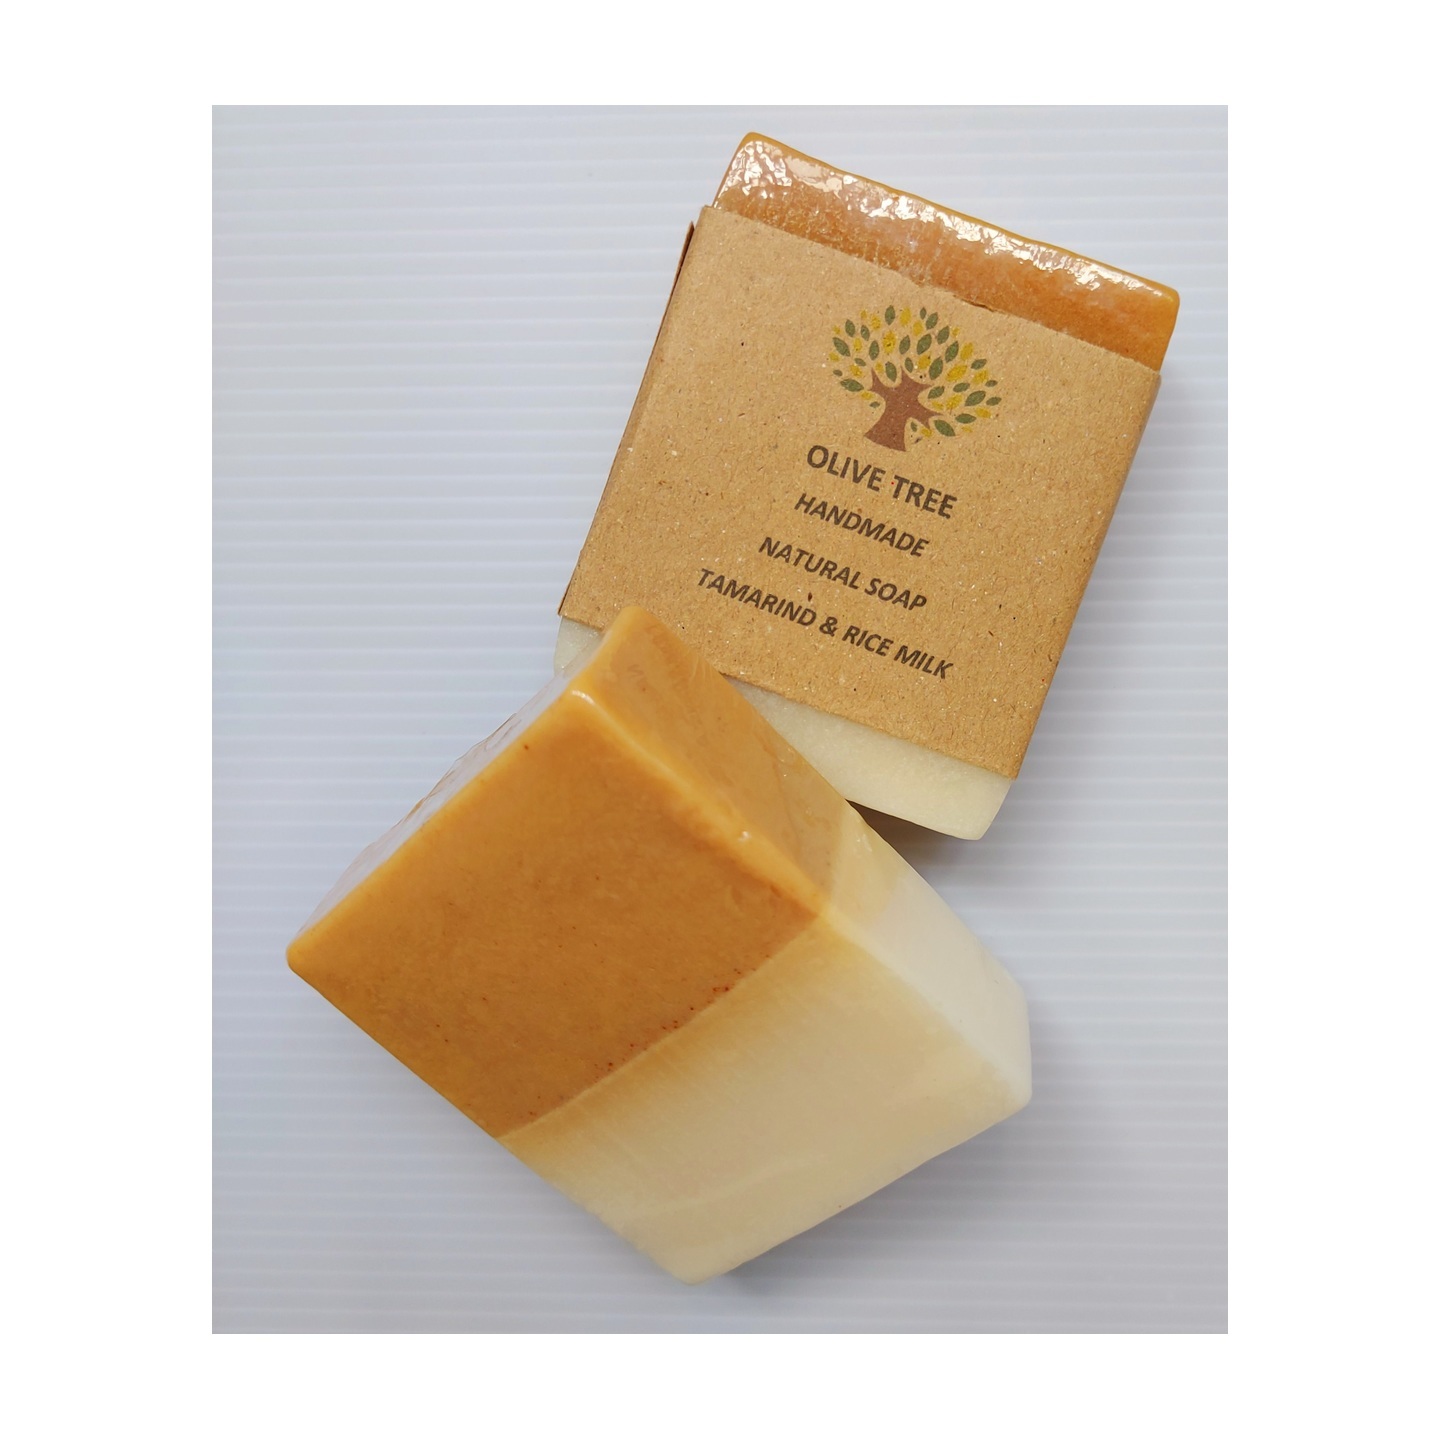 Handmade Natural Soap 90 gram - TamarindRice Milk